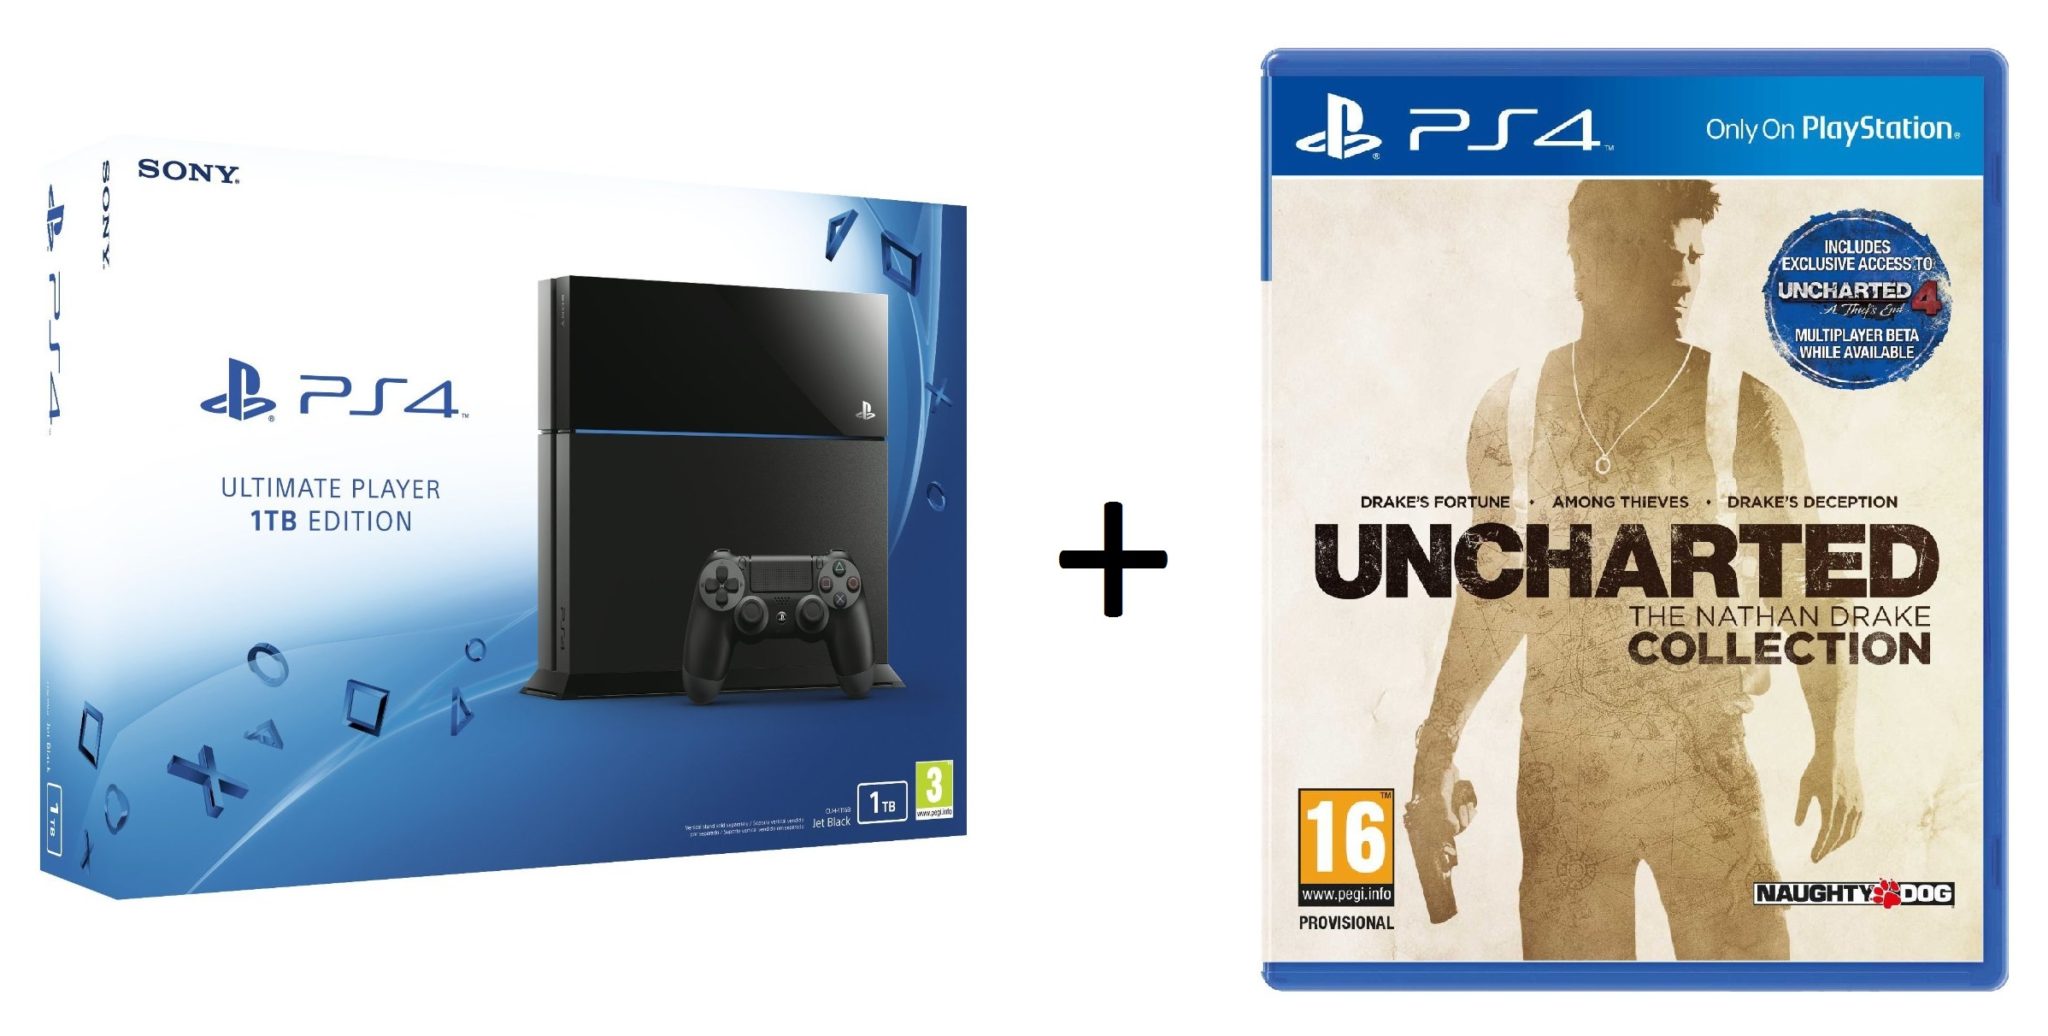 Uncharted gratis comprando una PS4 1TB